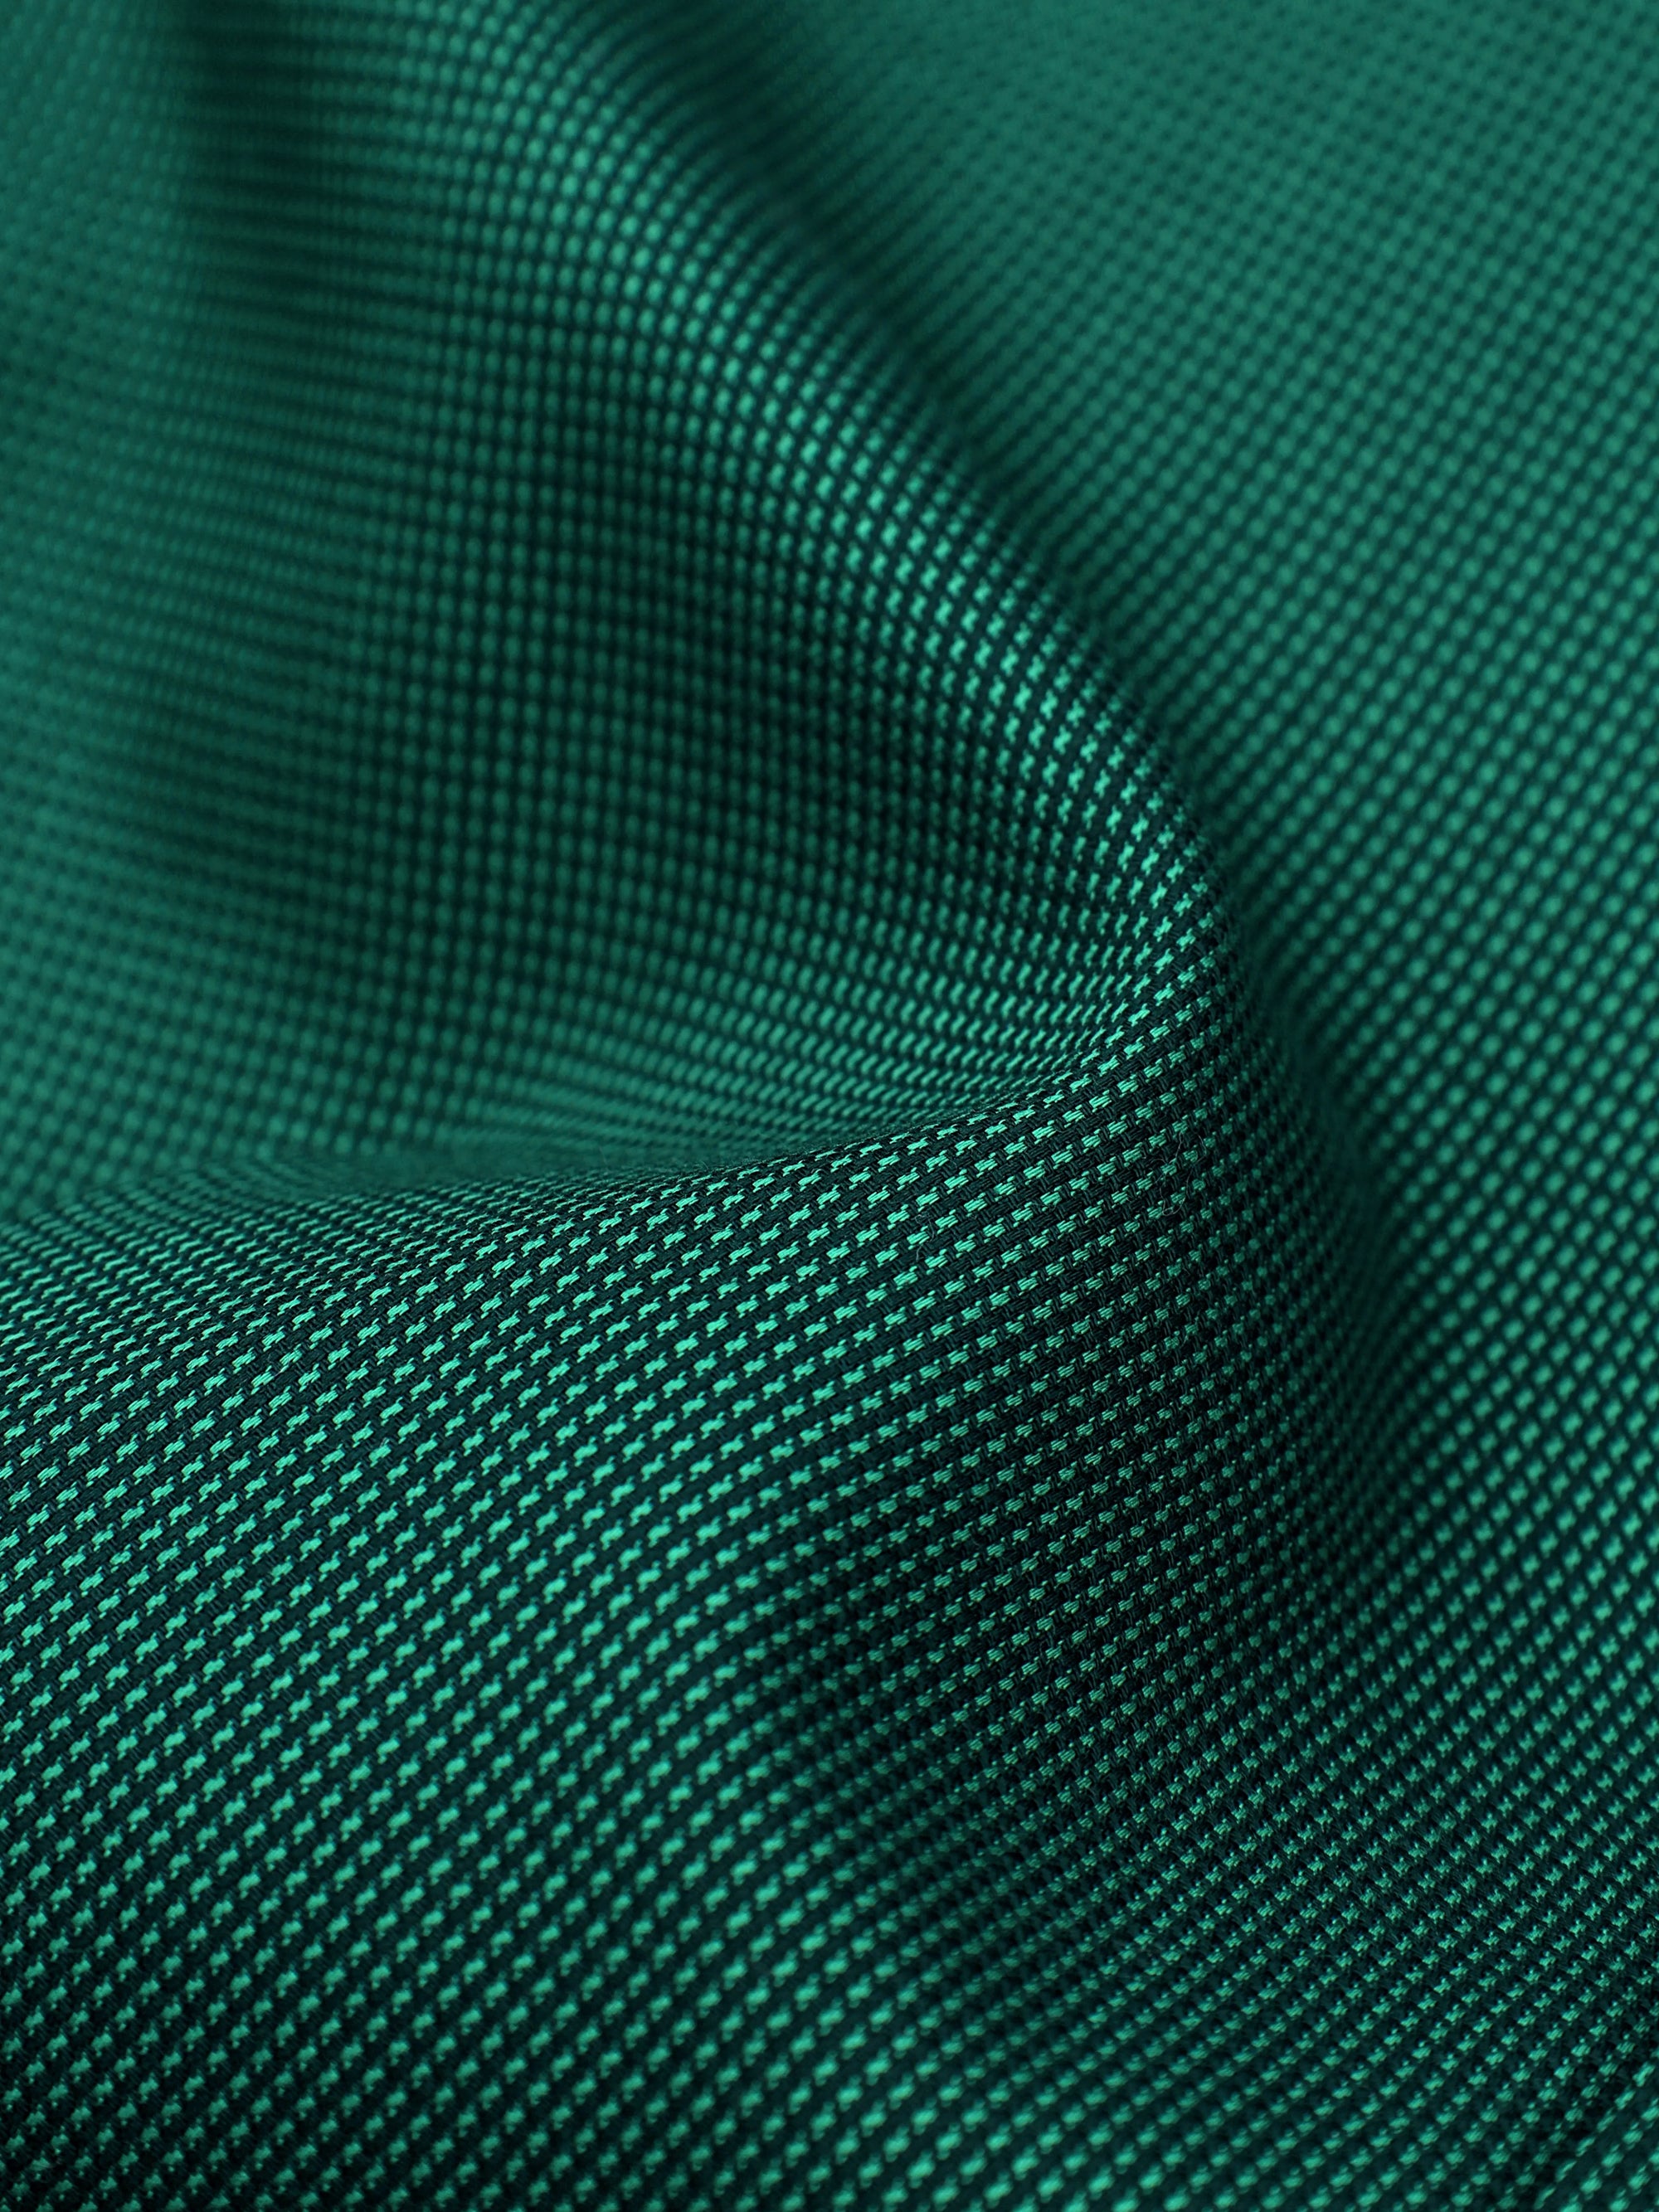 Bottle Green Dobby Textured Premium Cotton Shirt-[ON SALE]